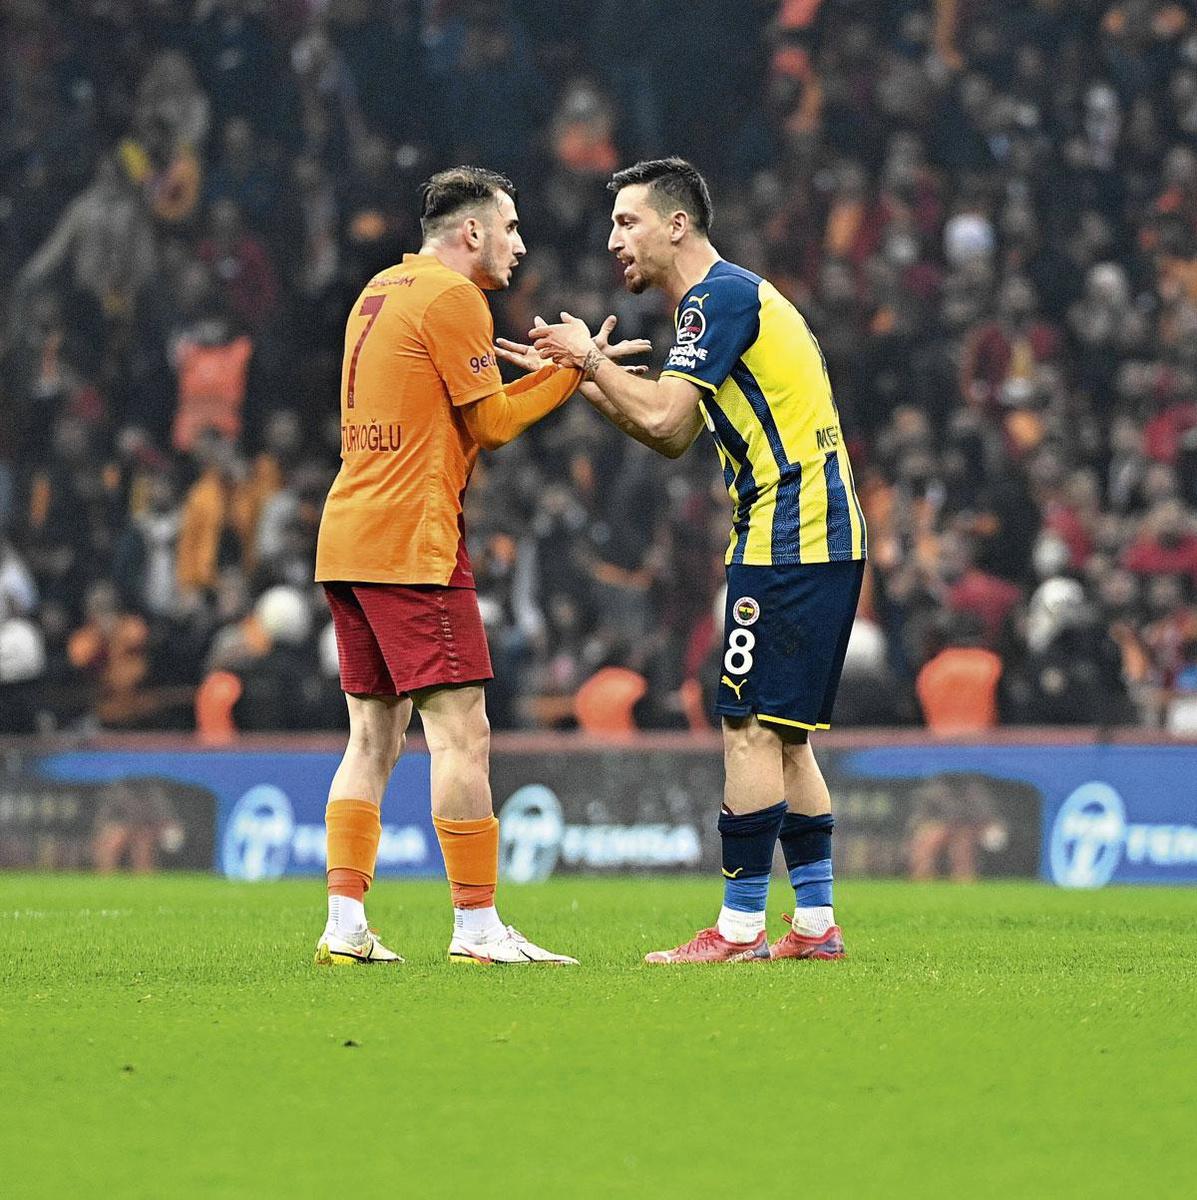 Prise de bec entre Kerem Aktürkoglu et Mert Hakan Yandas lors d'un toujours bouillant Galatasaray - Fenerbahçe.